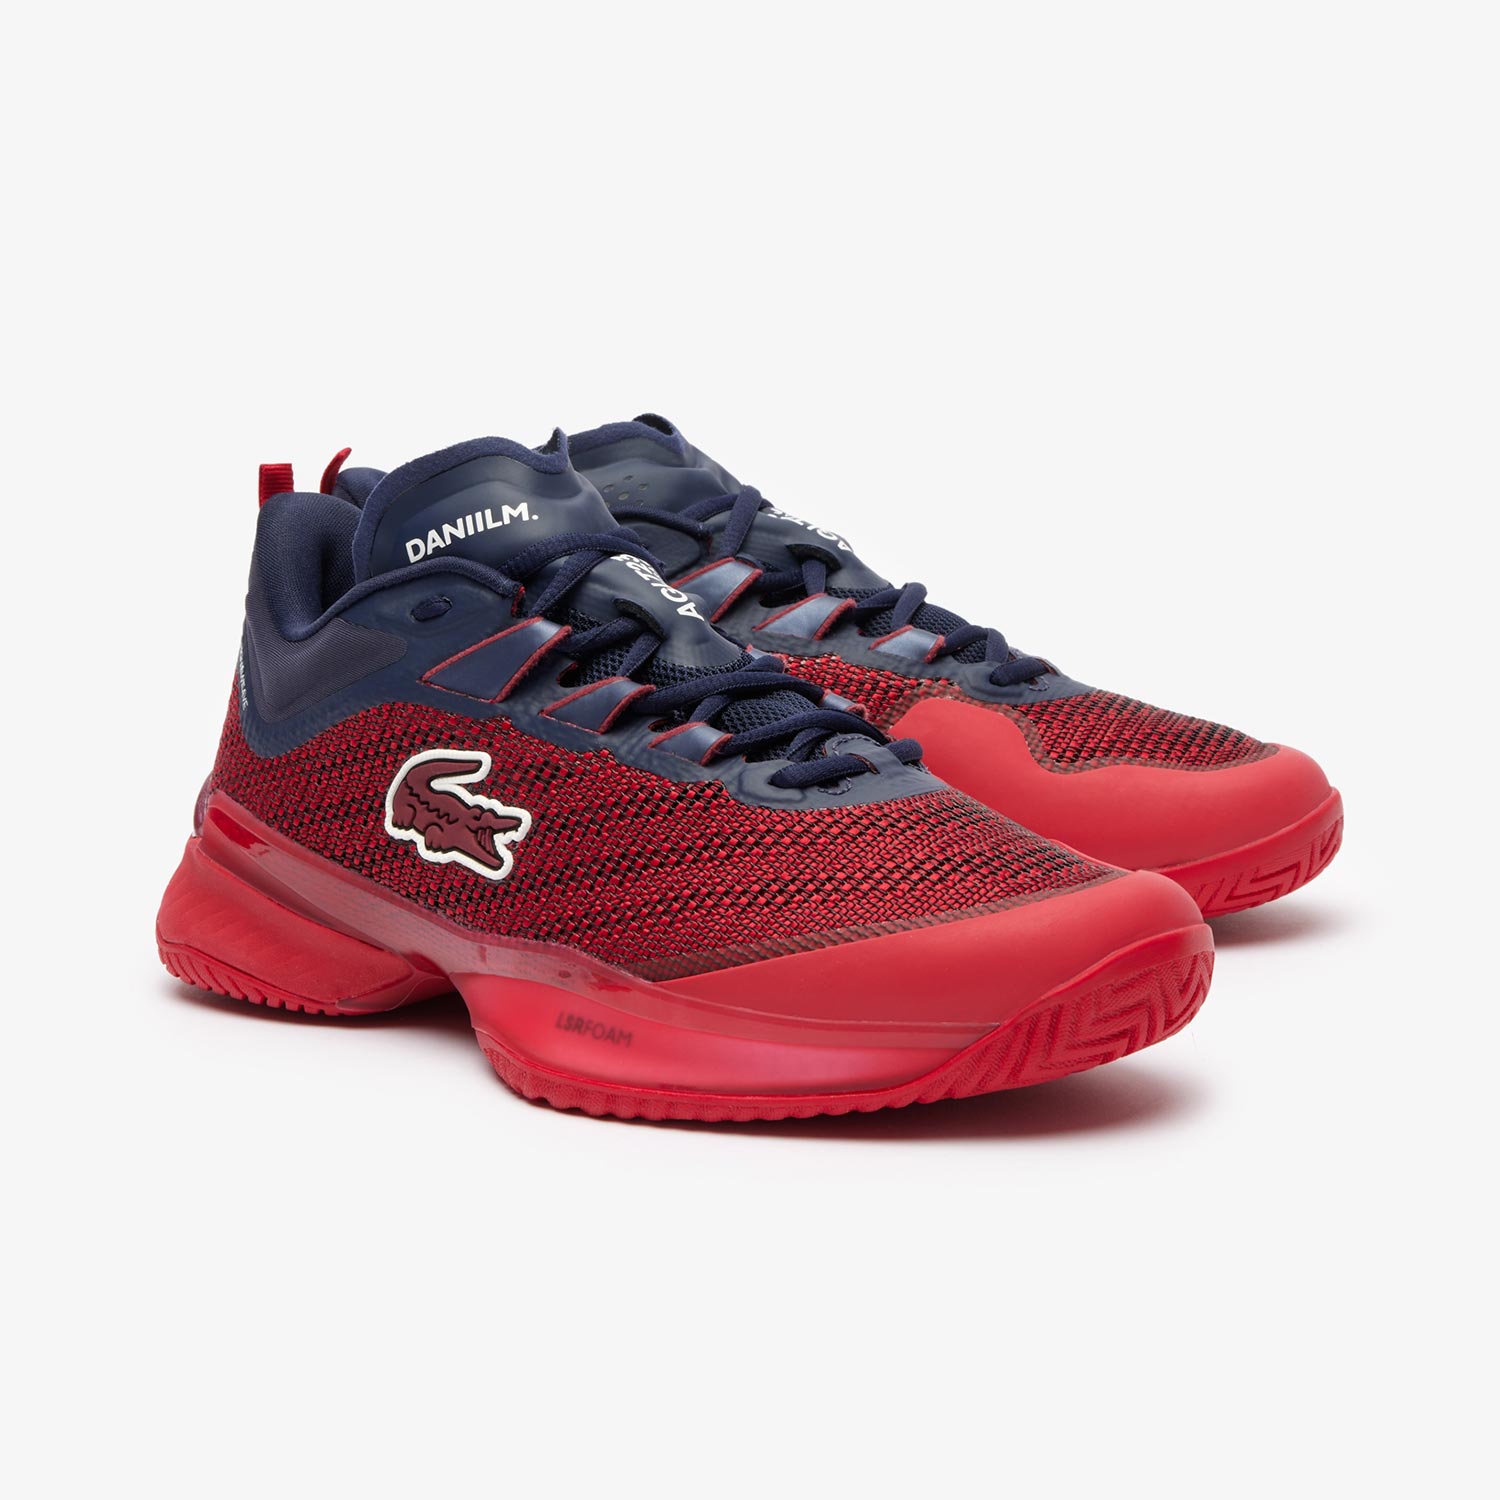 Lacoste AG-LT23 Ultra Men's Tennis Shoes - Red (3)